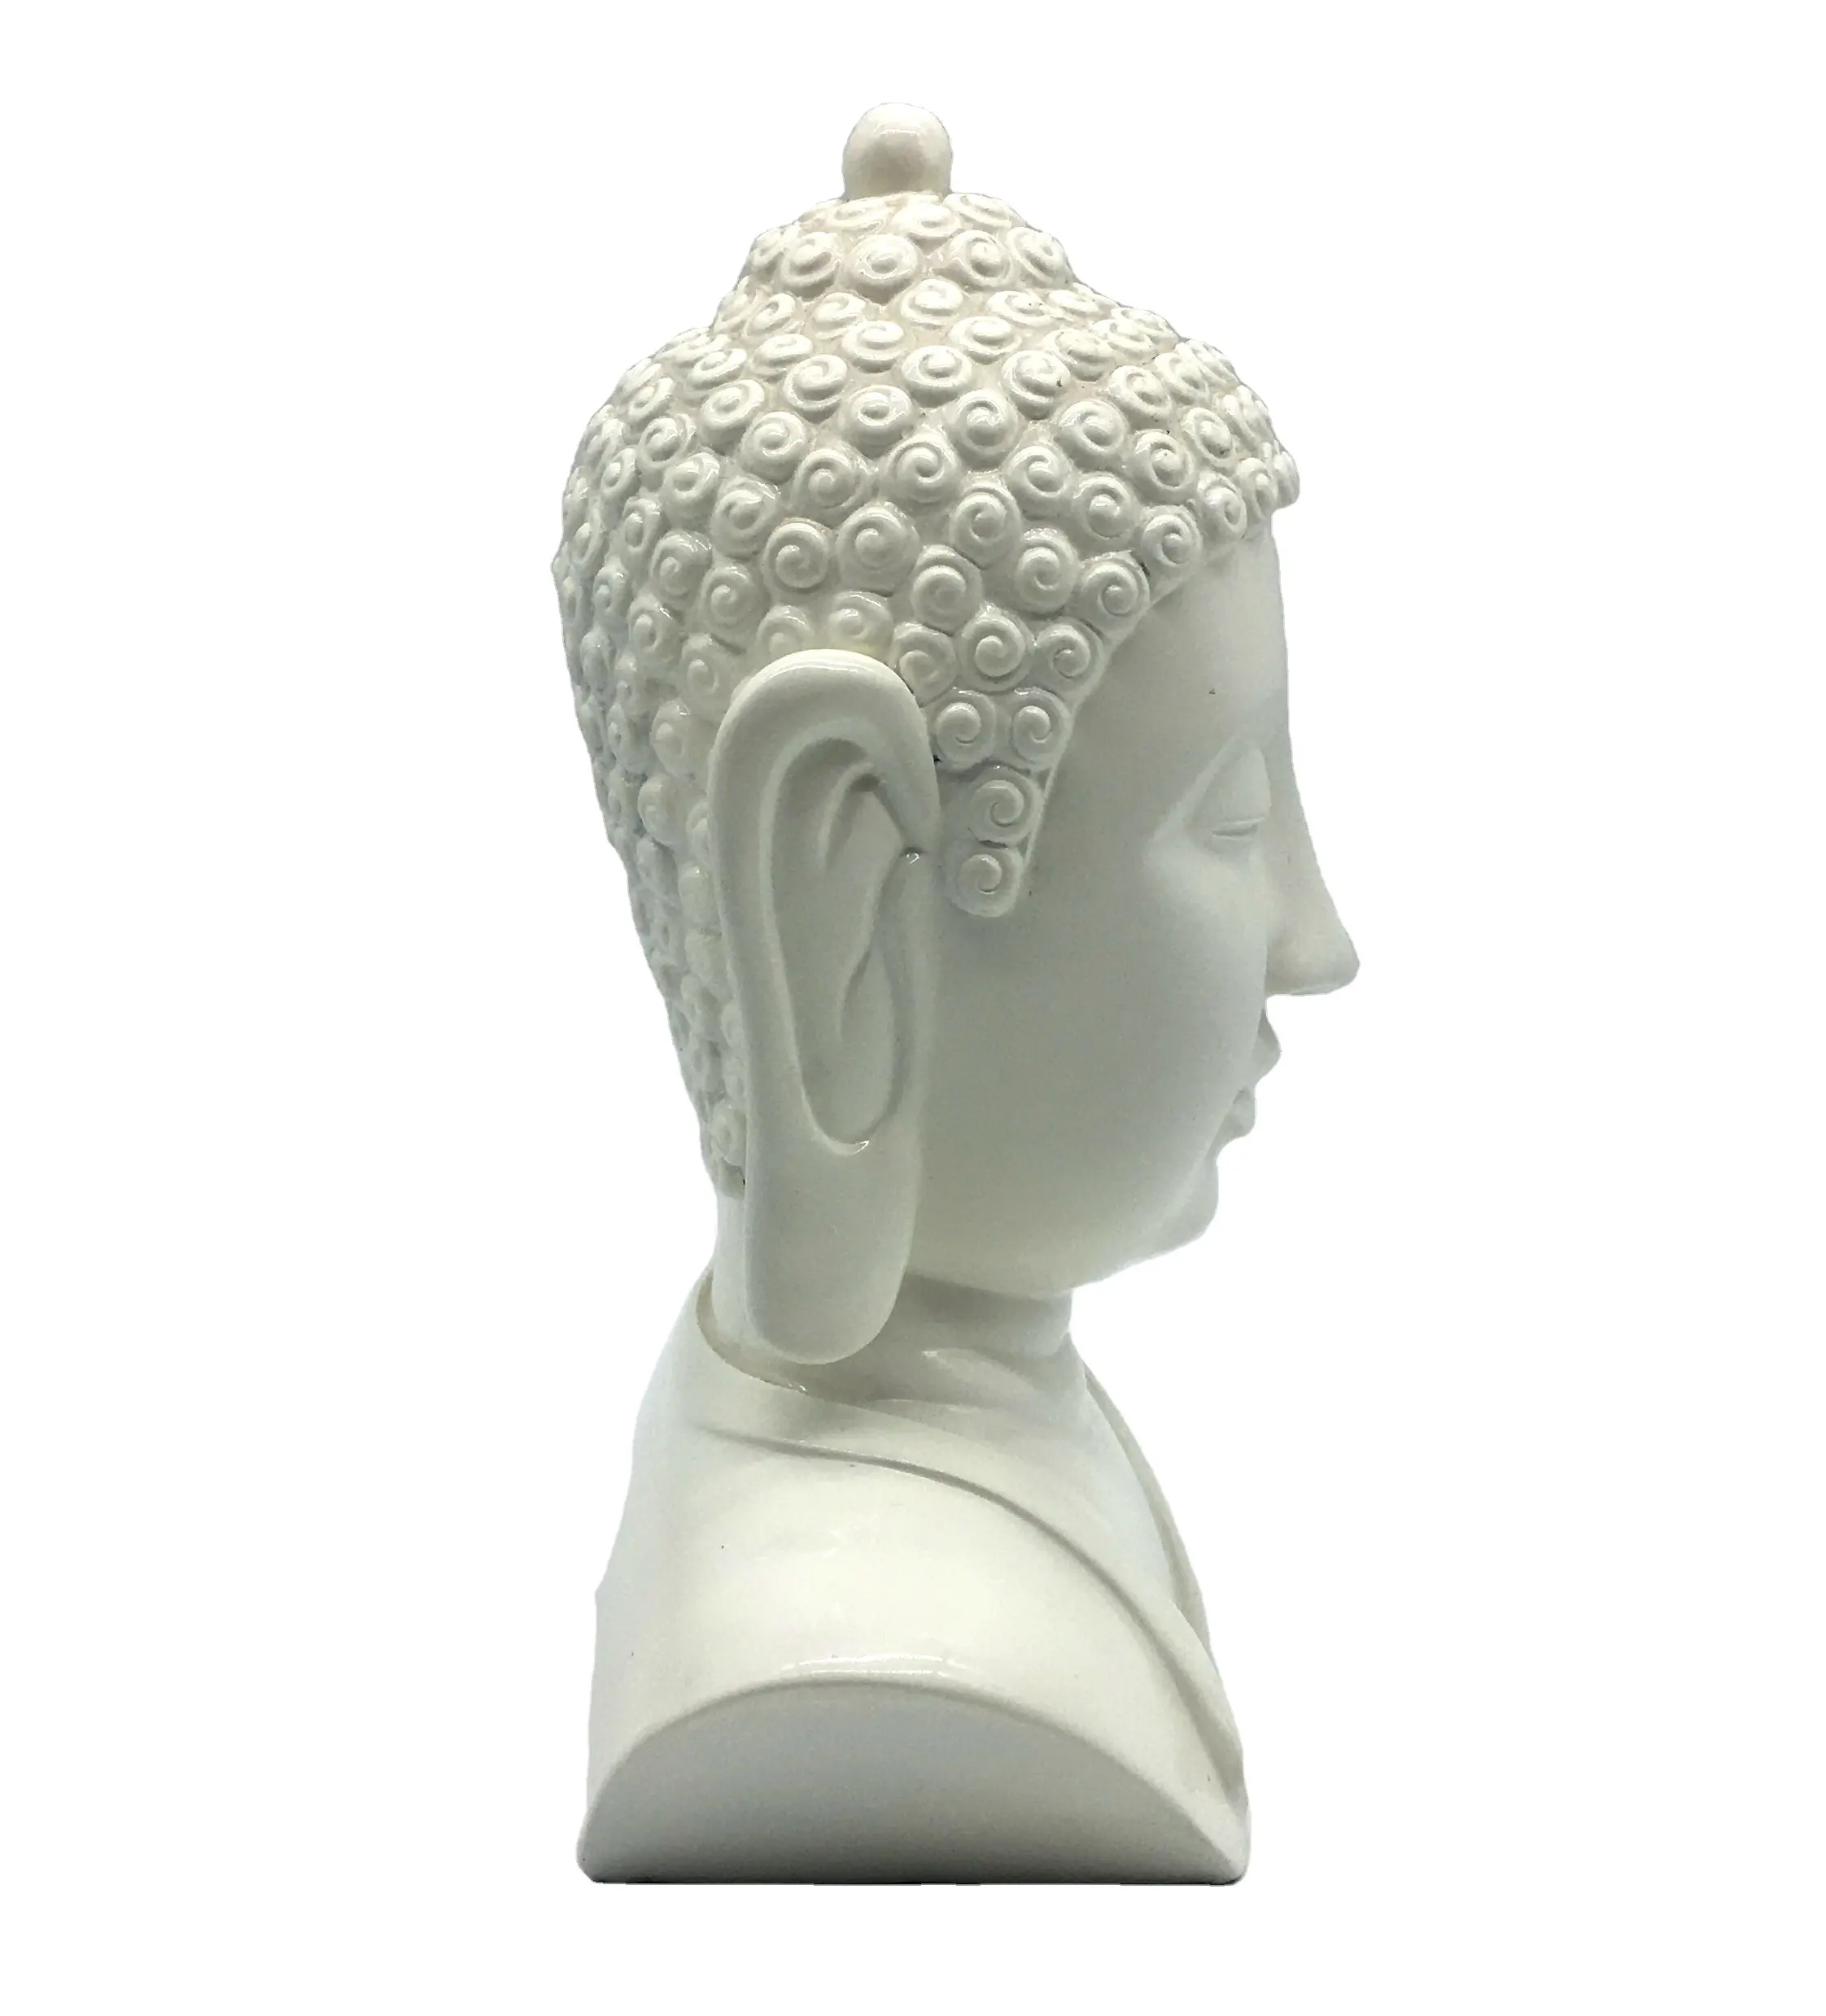 Handmade Resin Buddha Hot Sale Customized Religious White Color Buddha Statues With Ceramic Finishing